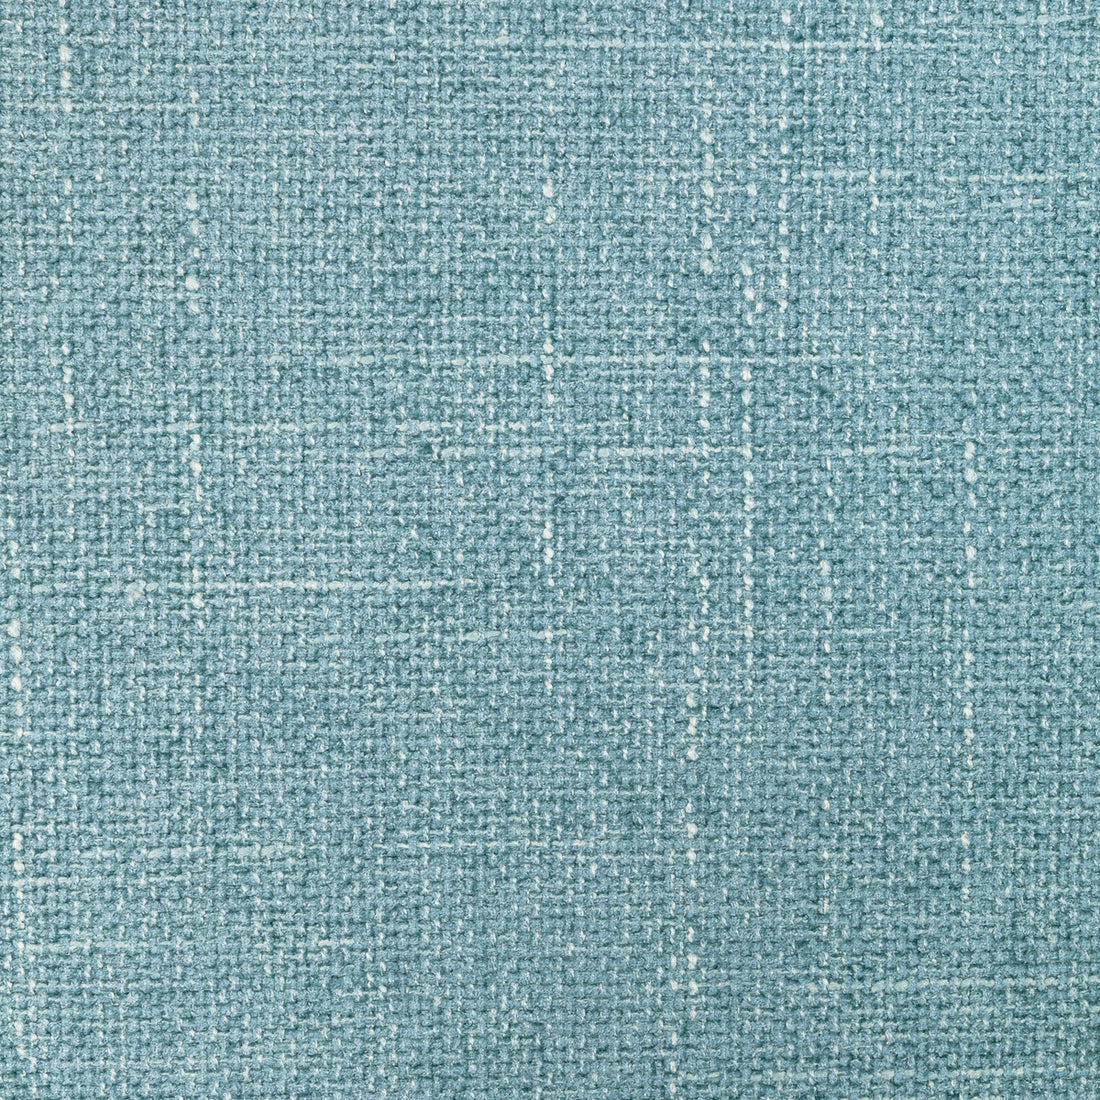 Kravet Smart fabric in 36579-15 color - pattern 36579.15.0 - by Kravet Smart in the Performance Kravetarmor collection